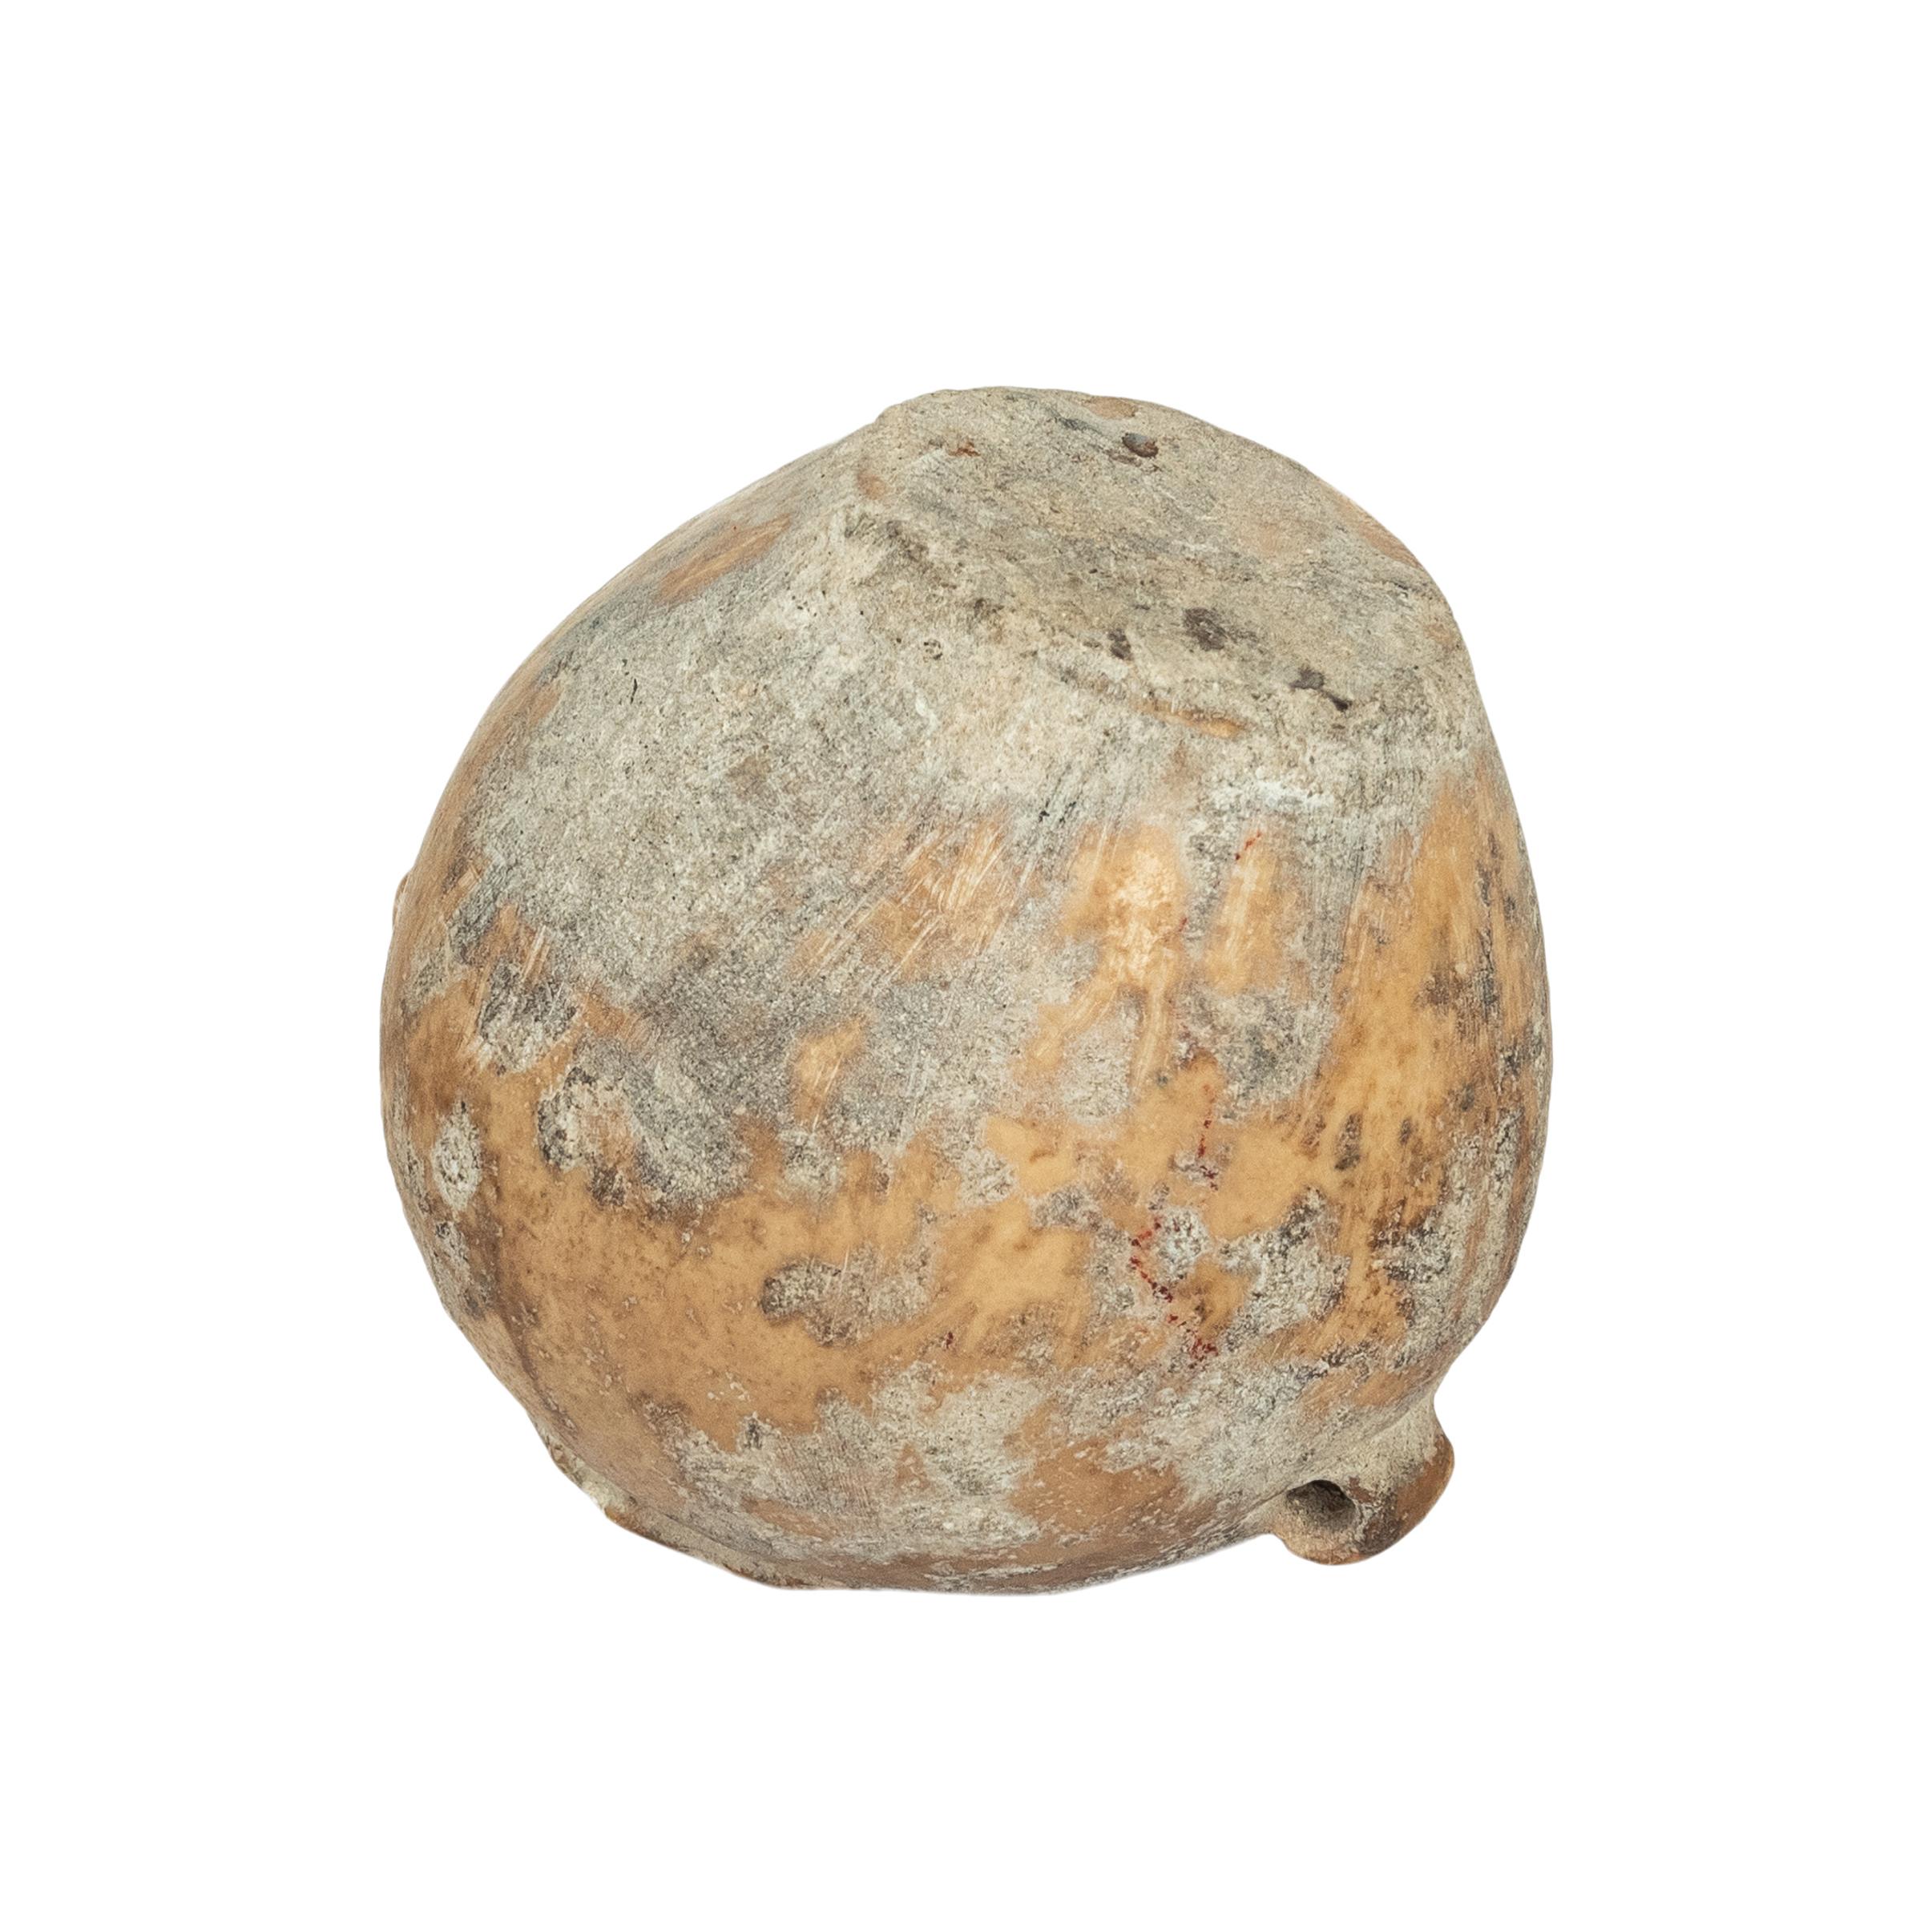 Ancient Egyptian Old Kingdom Miniature Lime Stone Vessel Jar 2600-2800 BCE For Sale 6